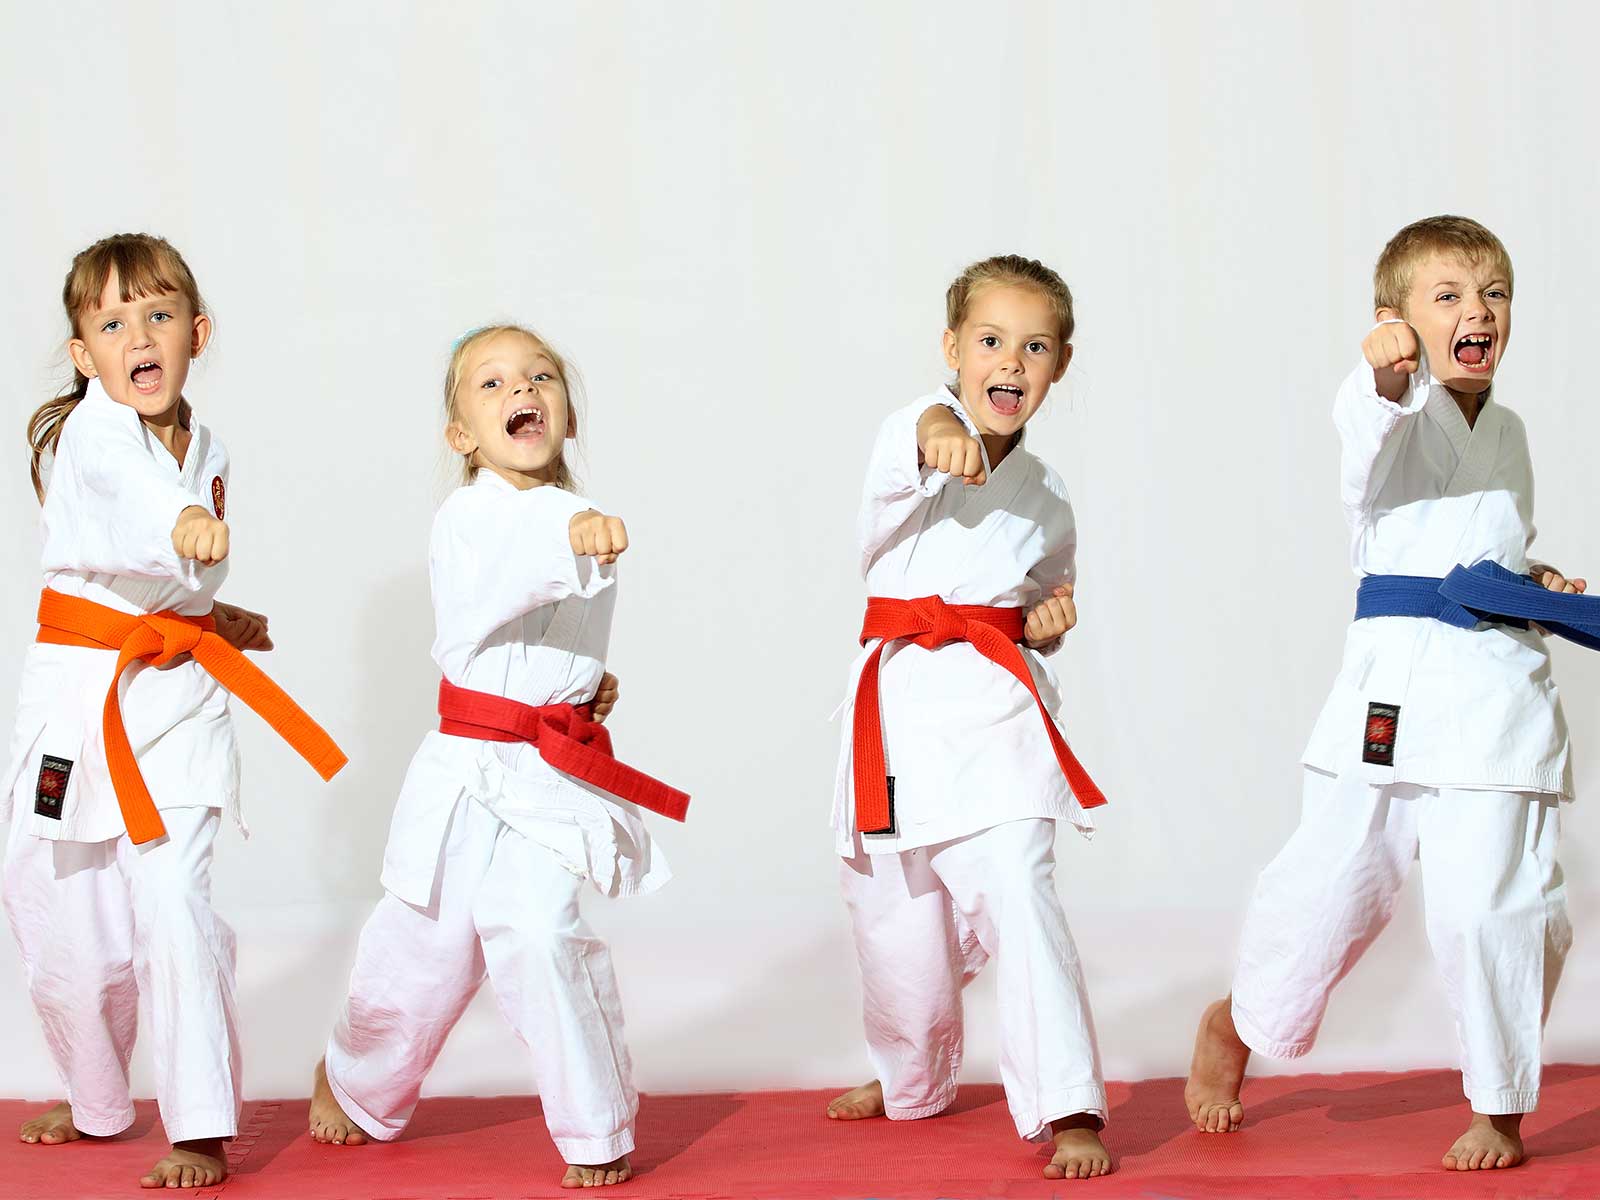 martial arts wallpaper, karate, martial arts uniform, dobok, japanese martial arts, martial arts, choi kwang do, shidokan, child, uniform, taekwondo